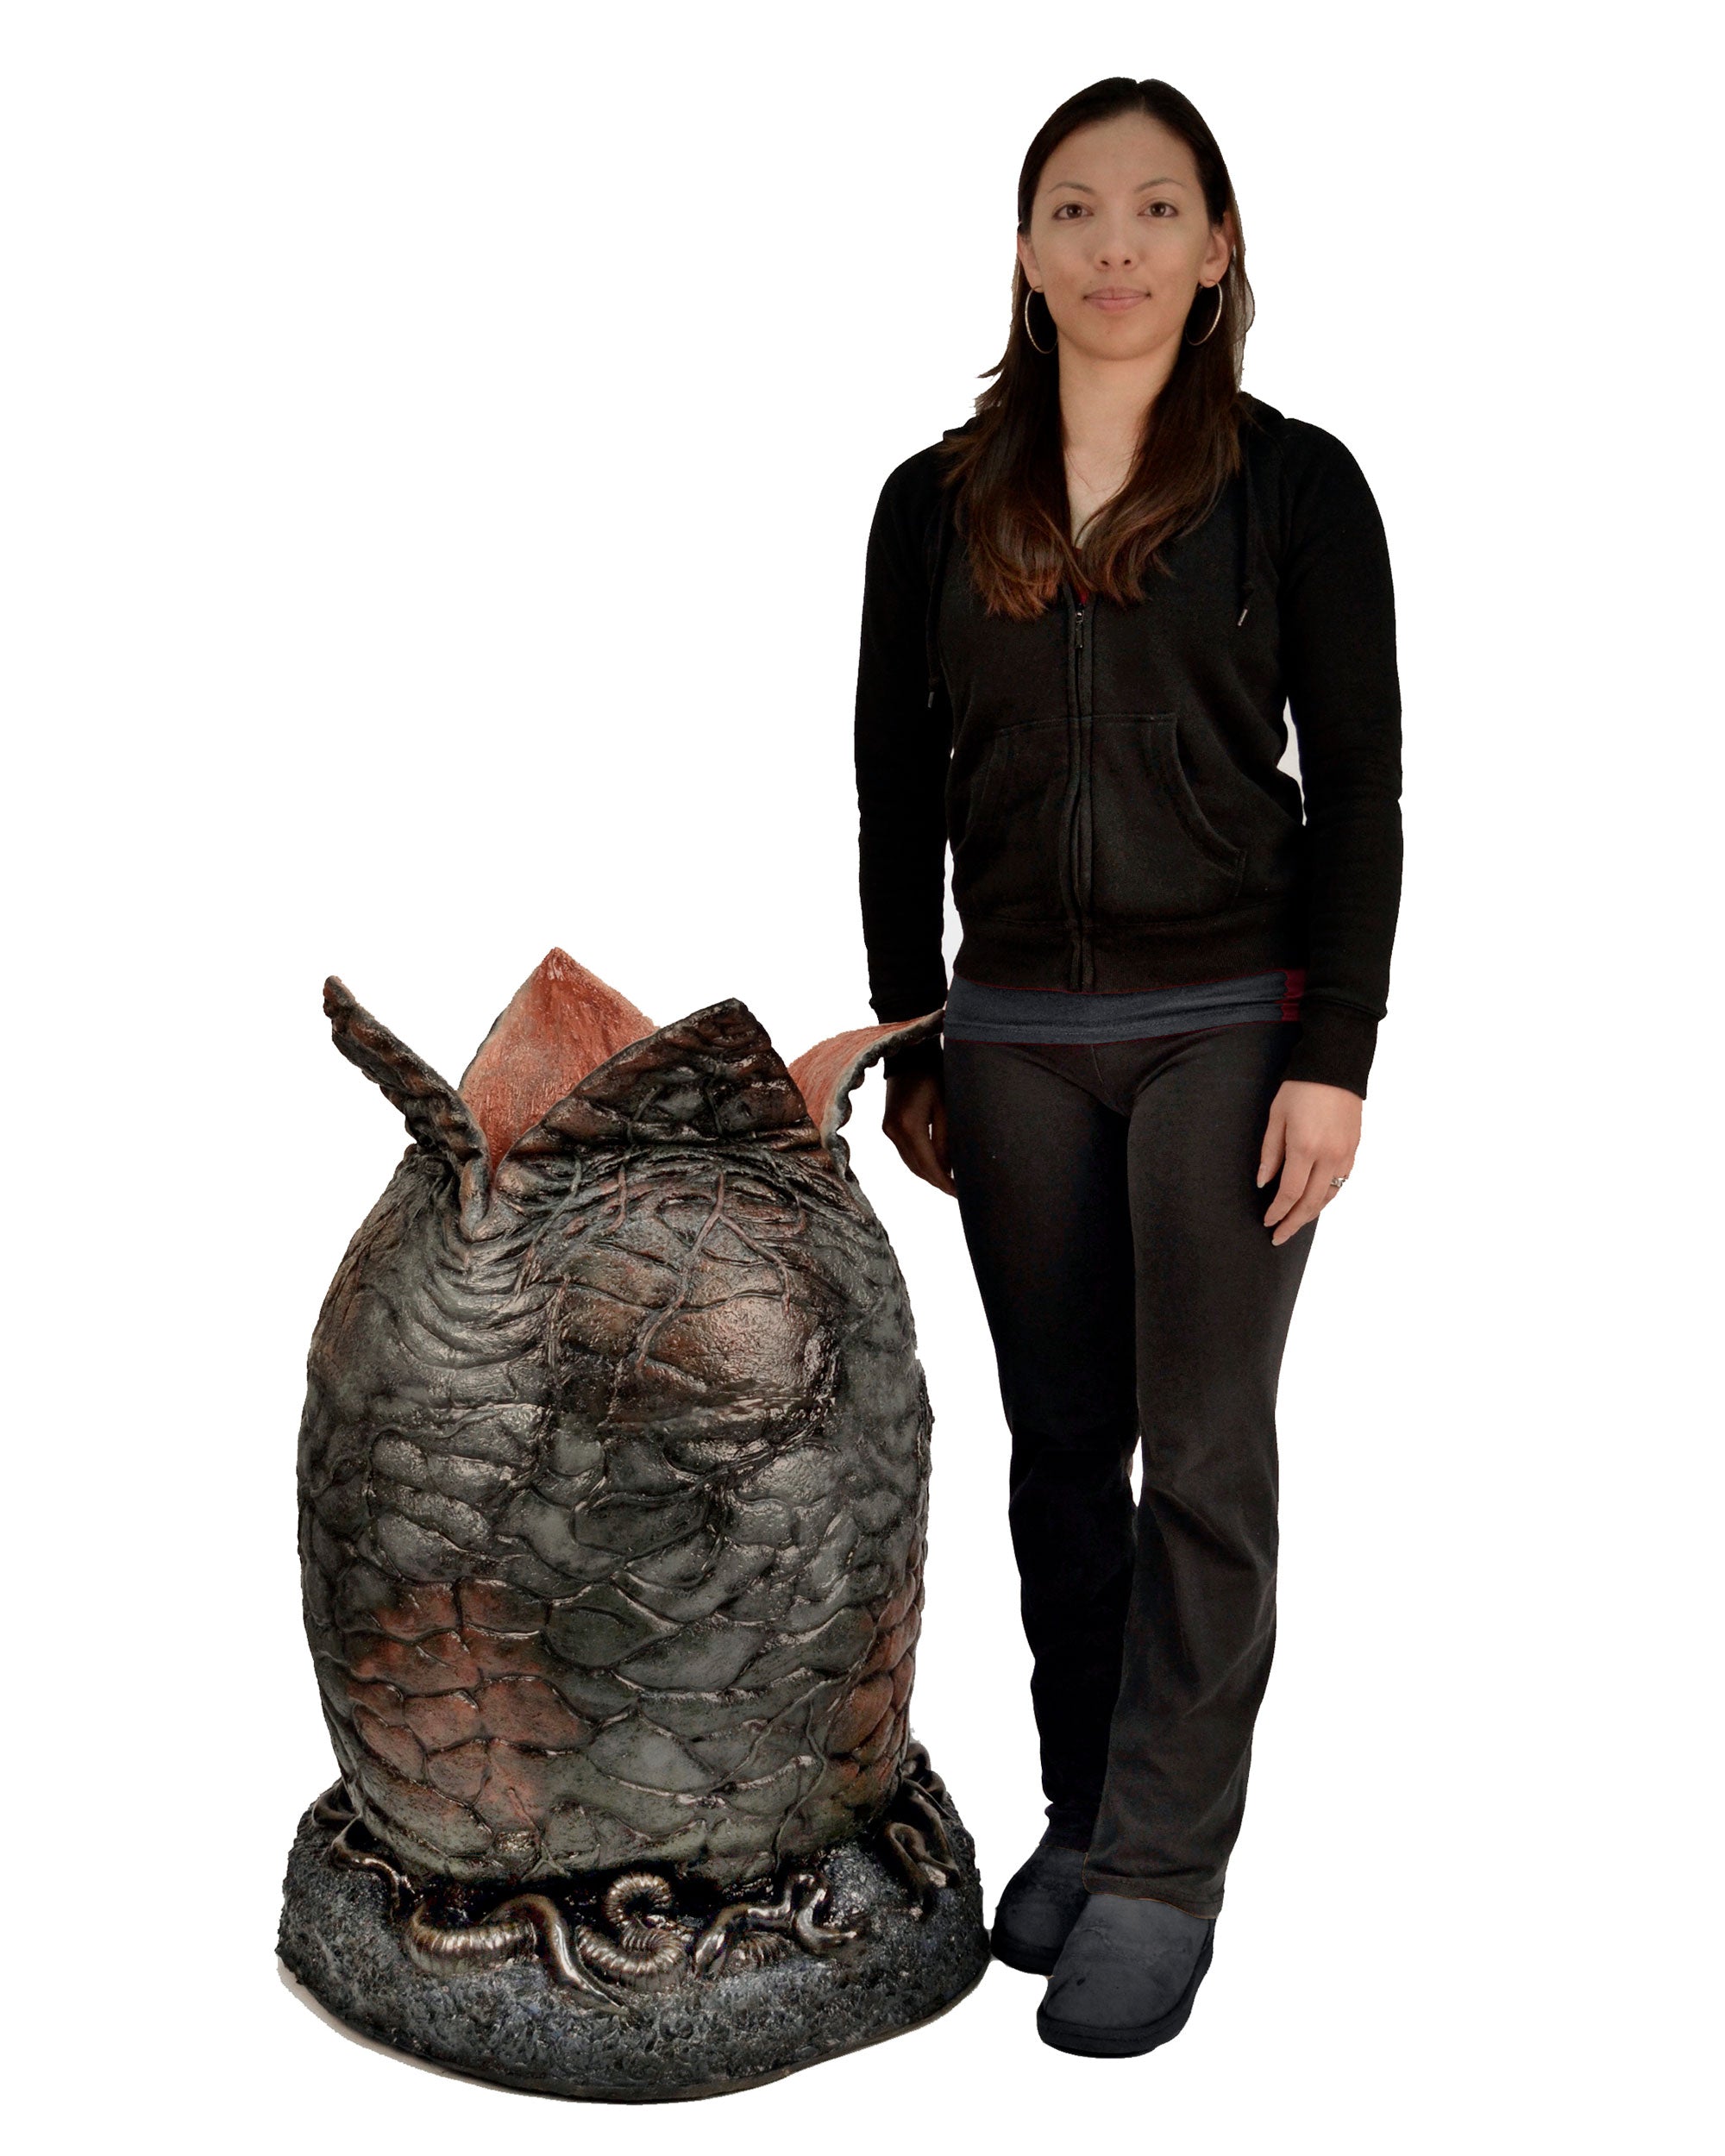 Woman standing next to life-size alien Xenomorph egg